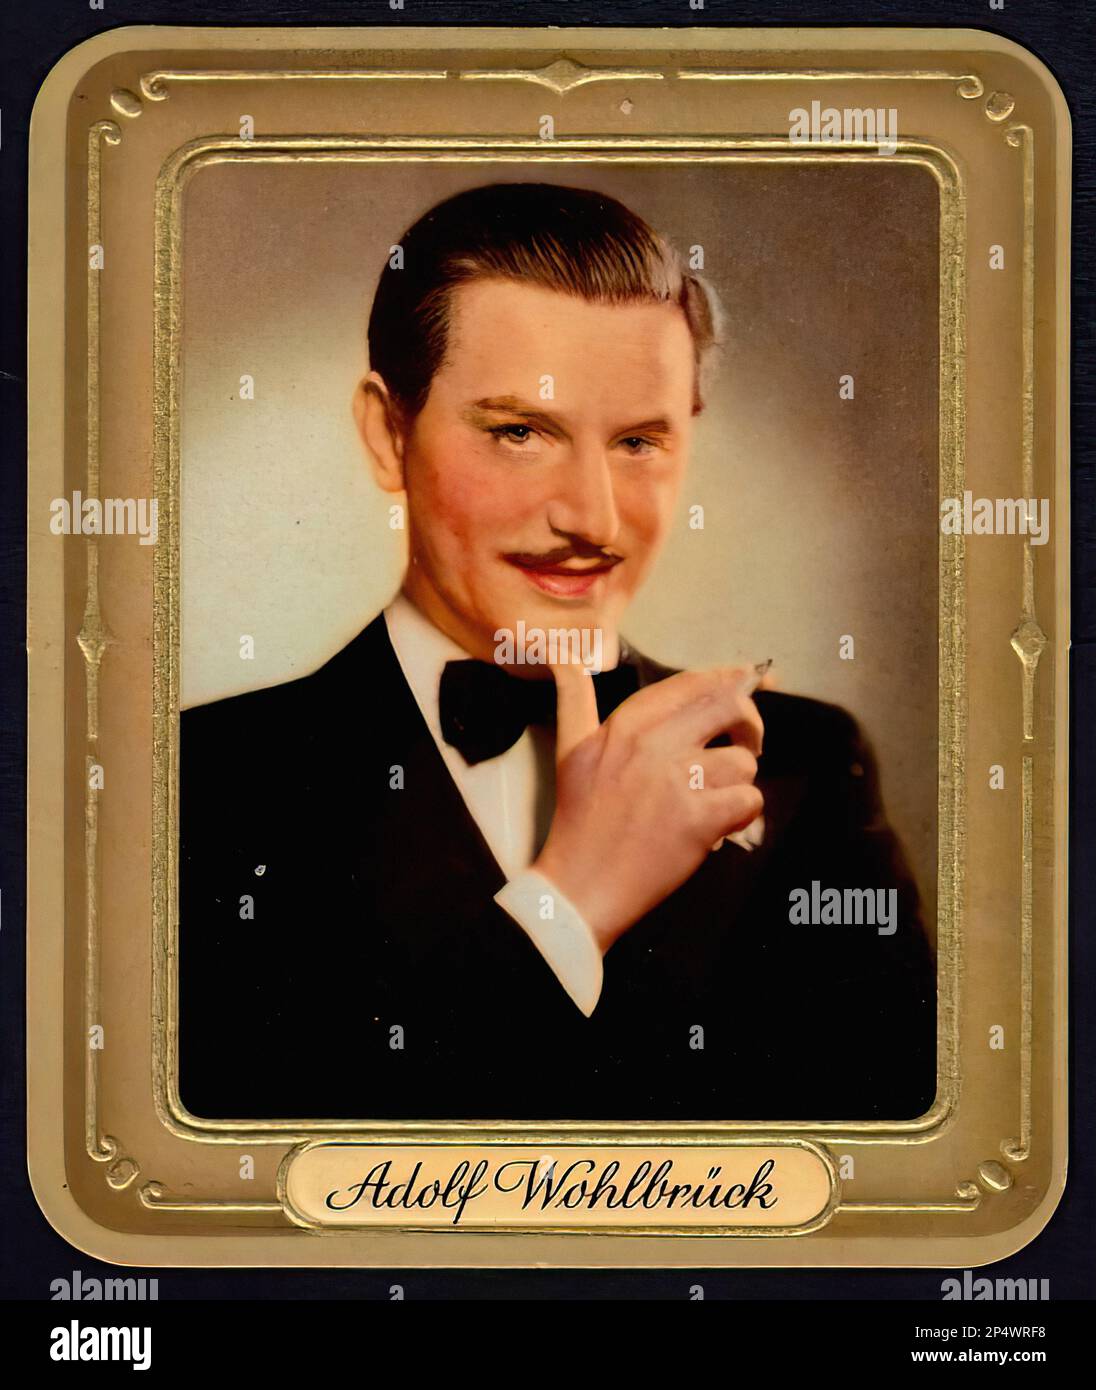 Portrait of Adolf (Anton) Wohlbrück - Vintage German Cigarette Card Stock Photo